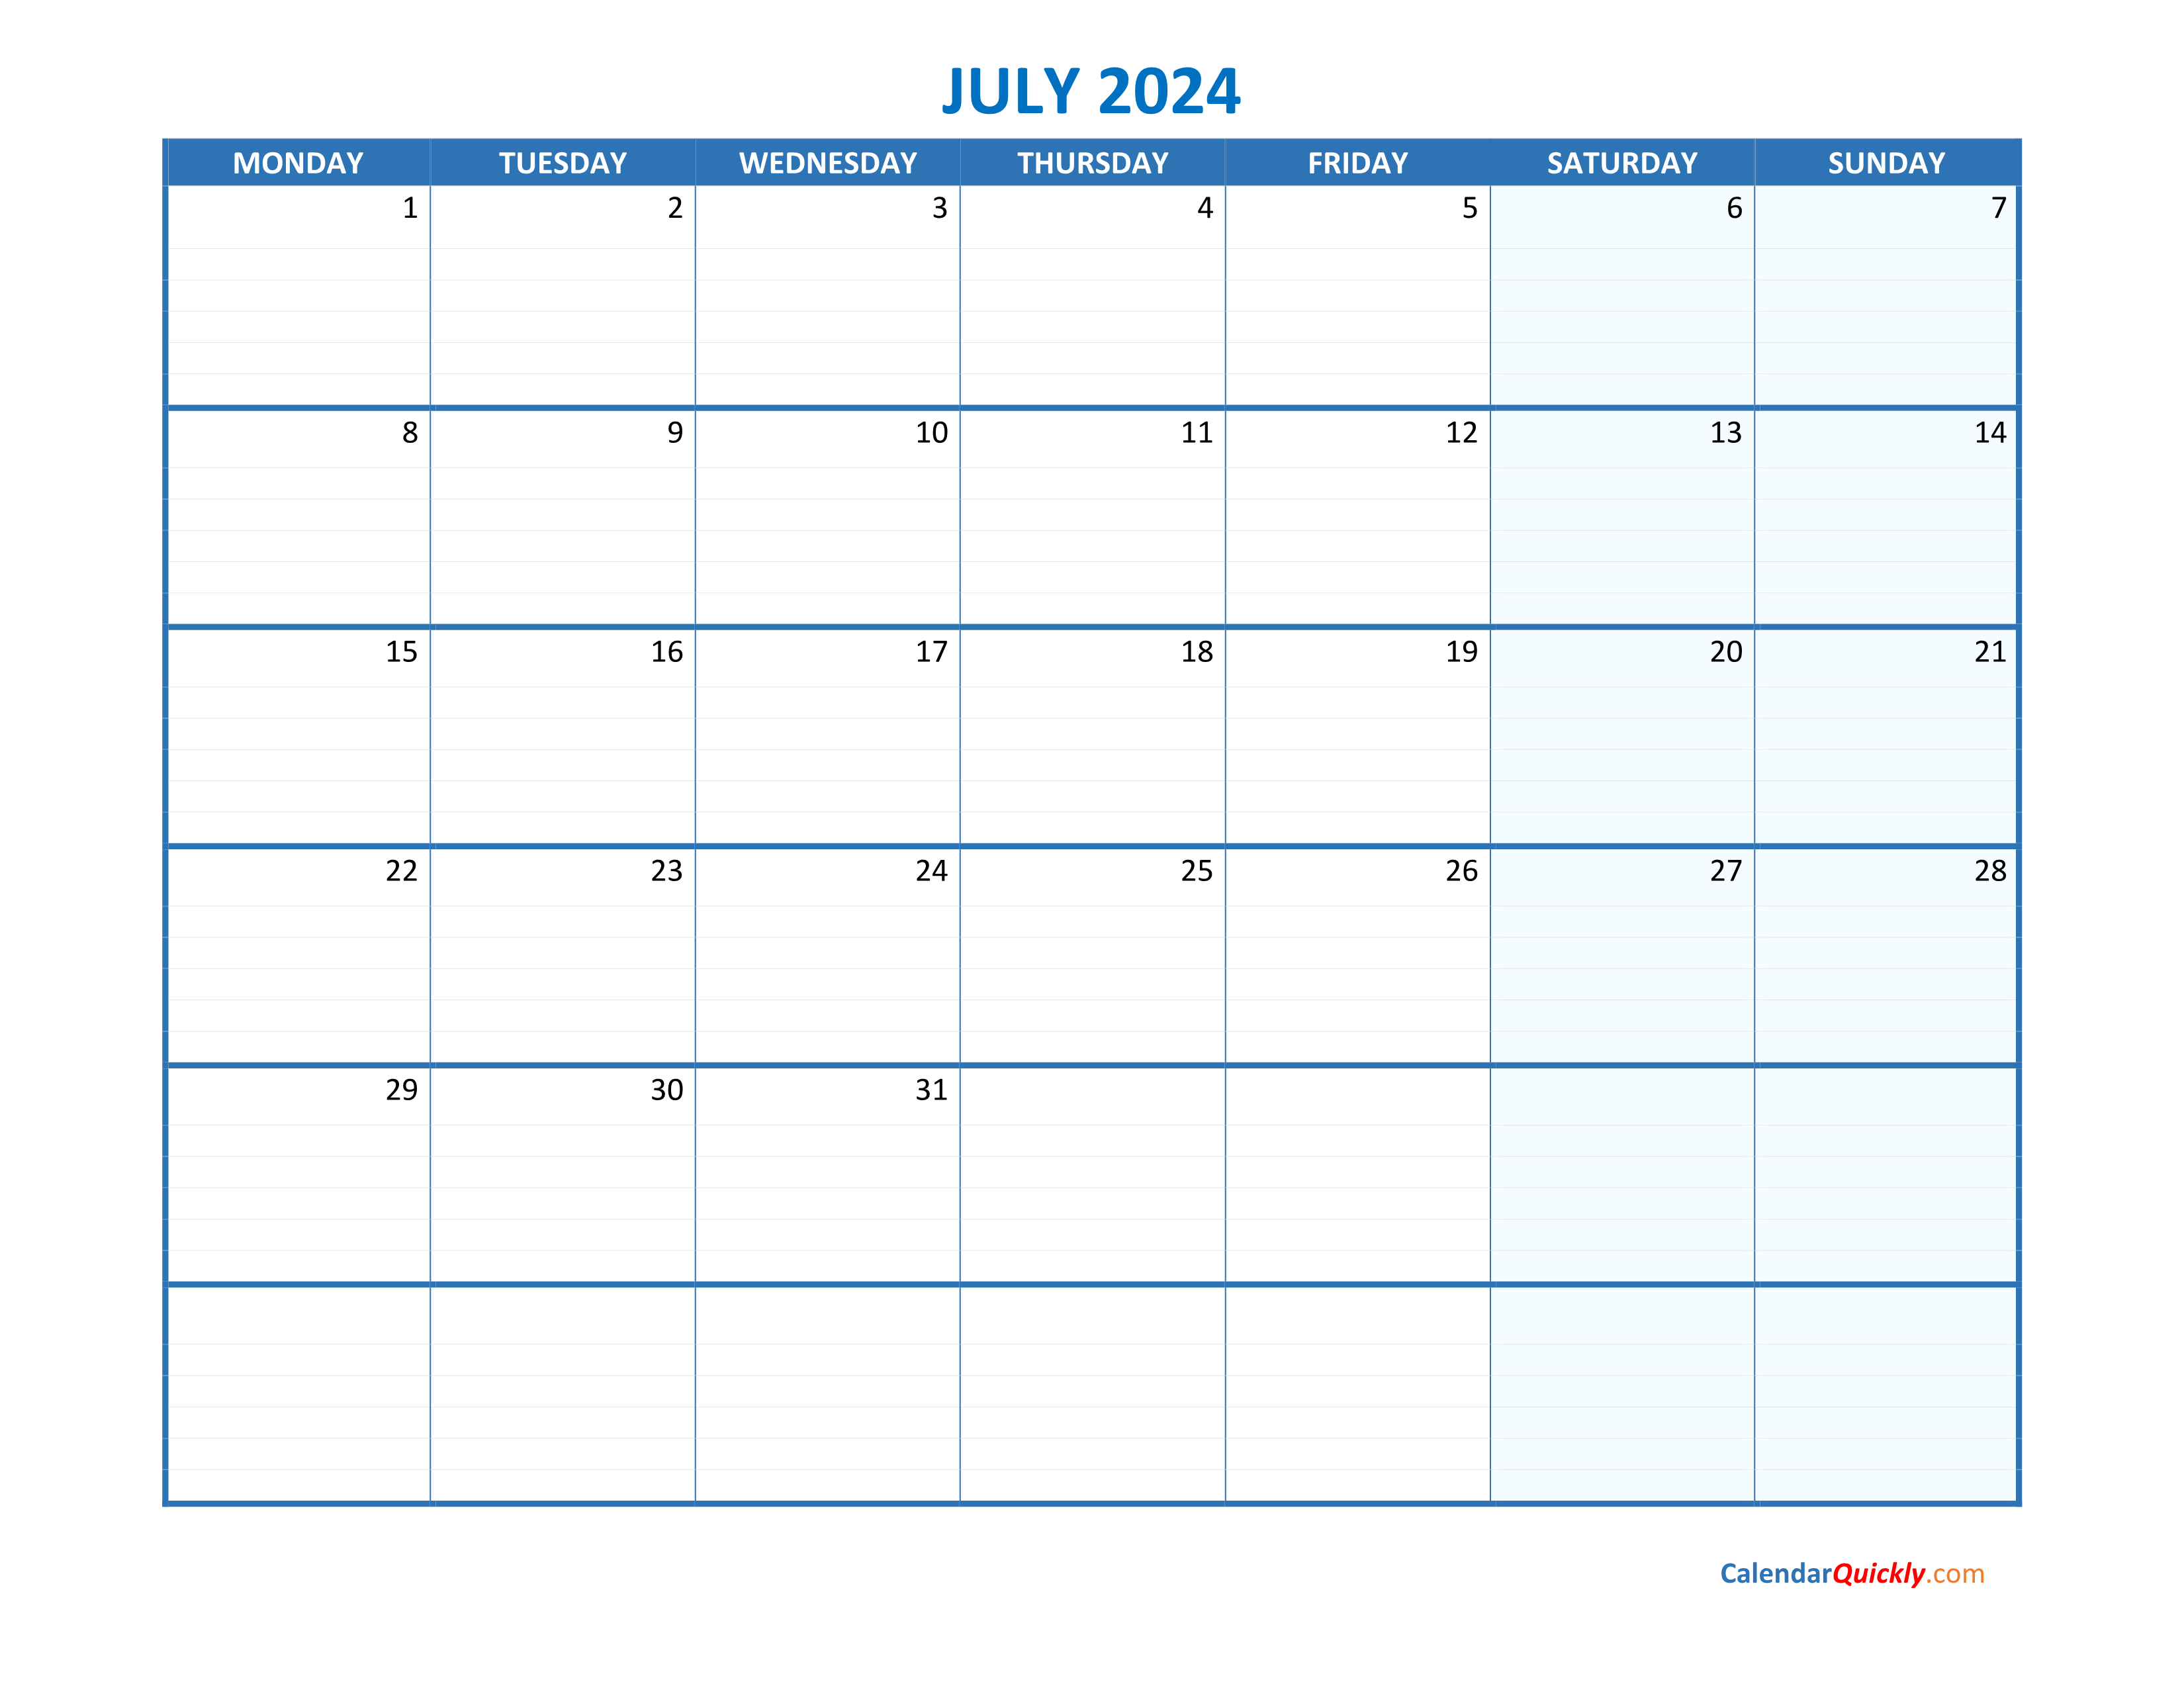 July Monday 2024 Blank Calendar Calendar Quickly - Free Printable 2024 Monday Start Calendar